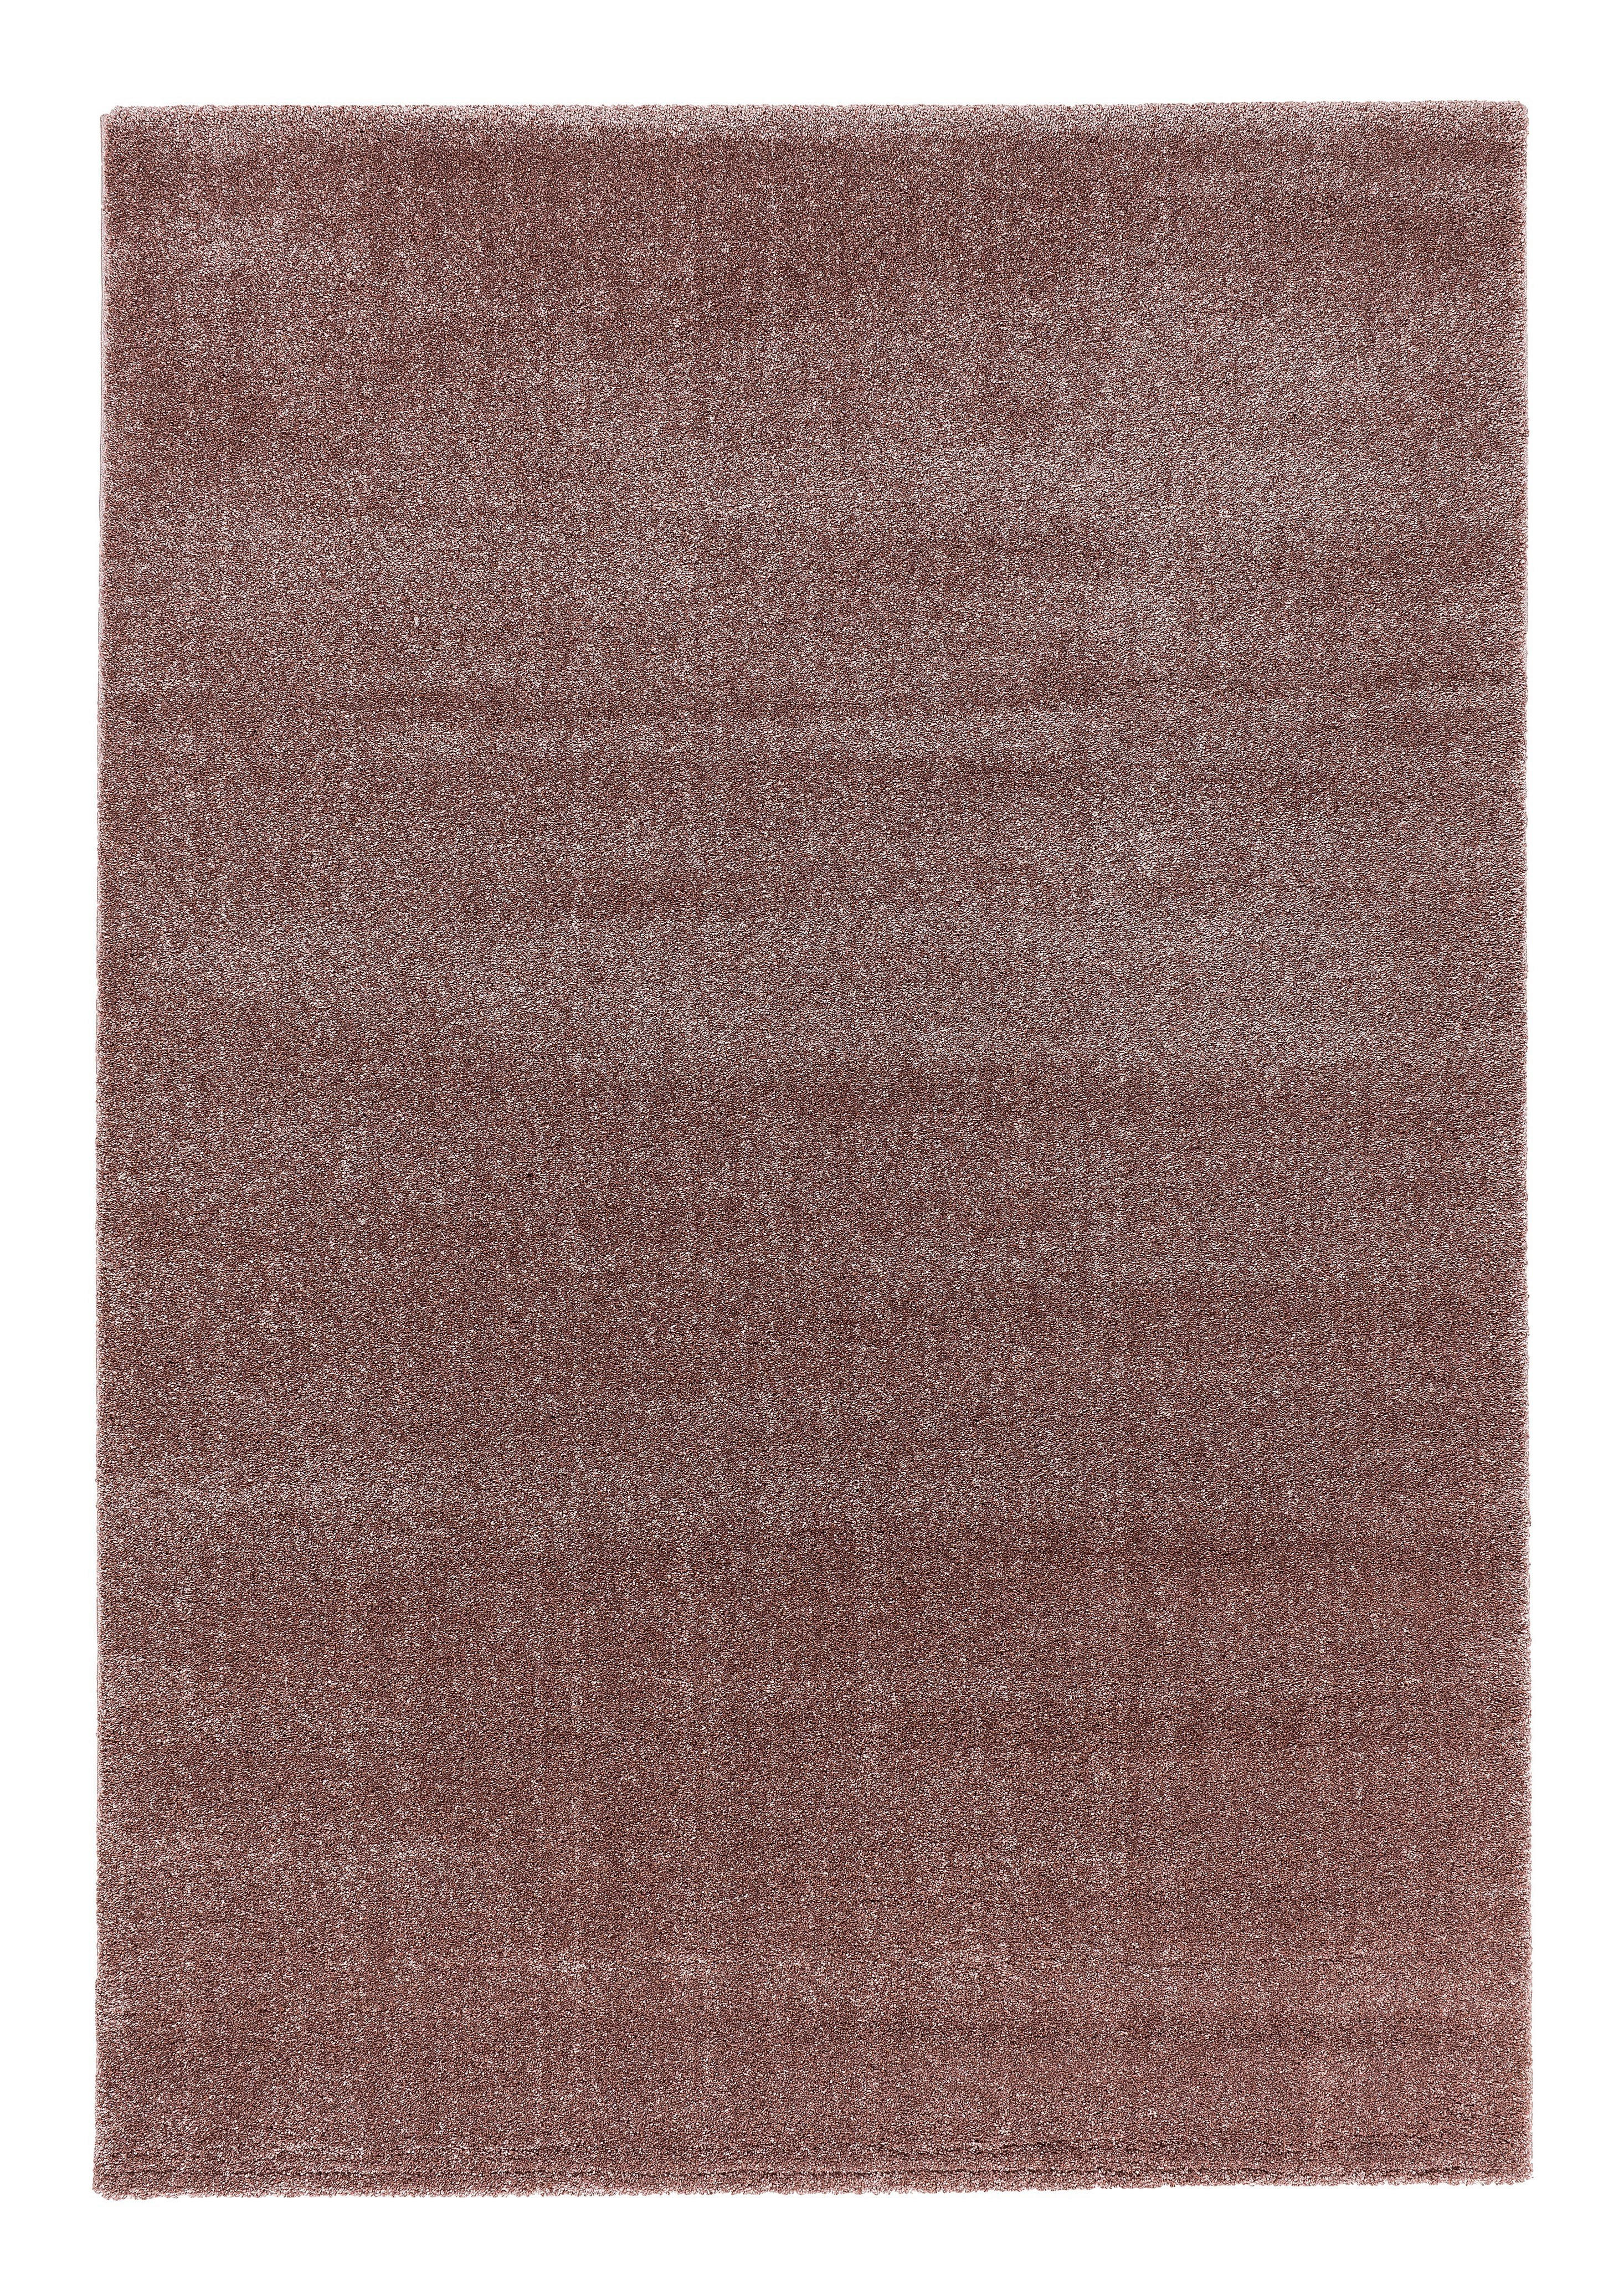 WEBTEPPICH 67/130 cm  - Aubergine, Basics, Textil (67/130cm) - Novel